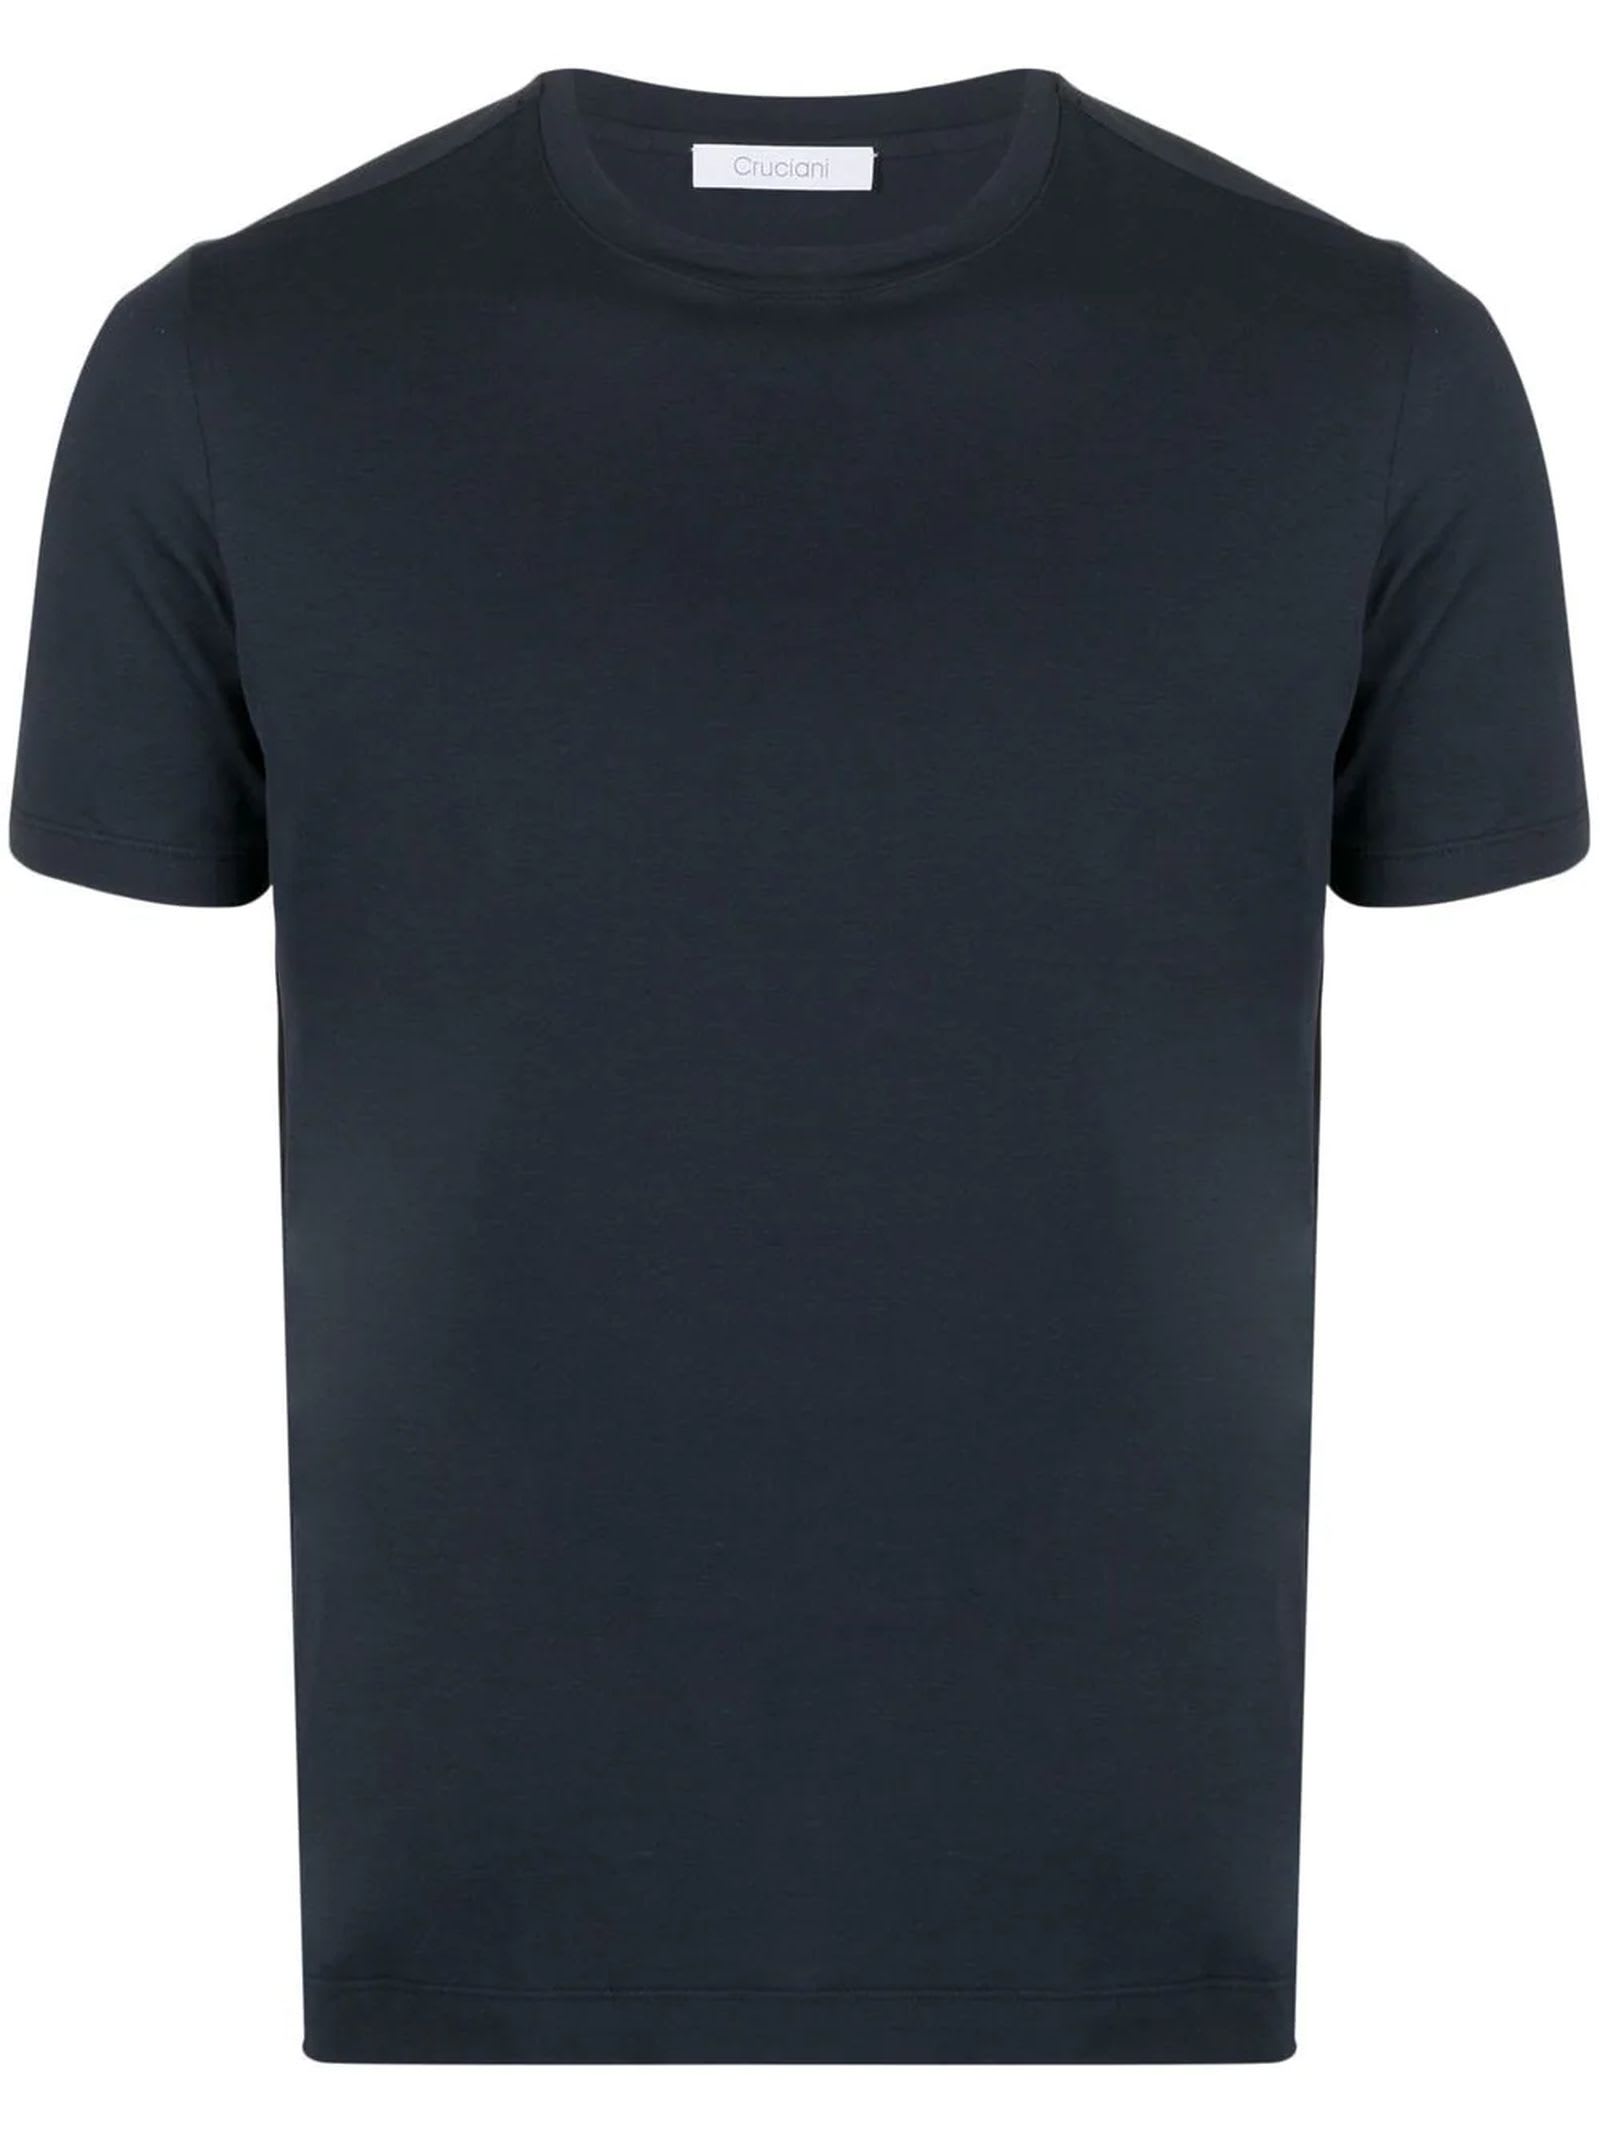 Cruciani Short-sleeved T-shirt